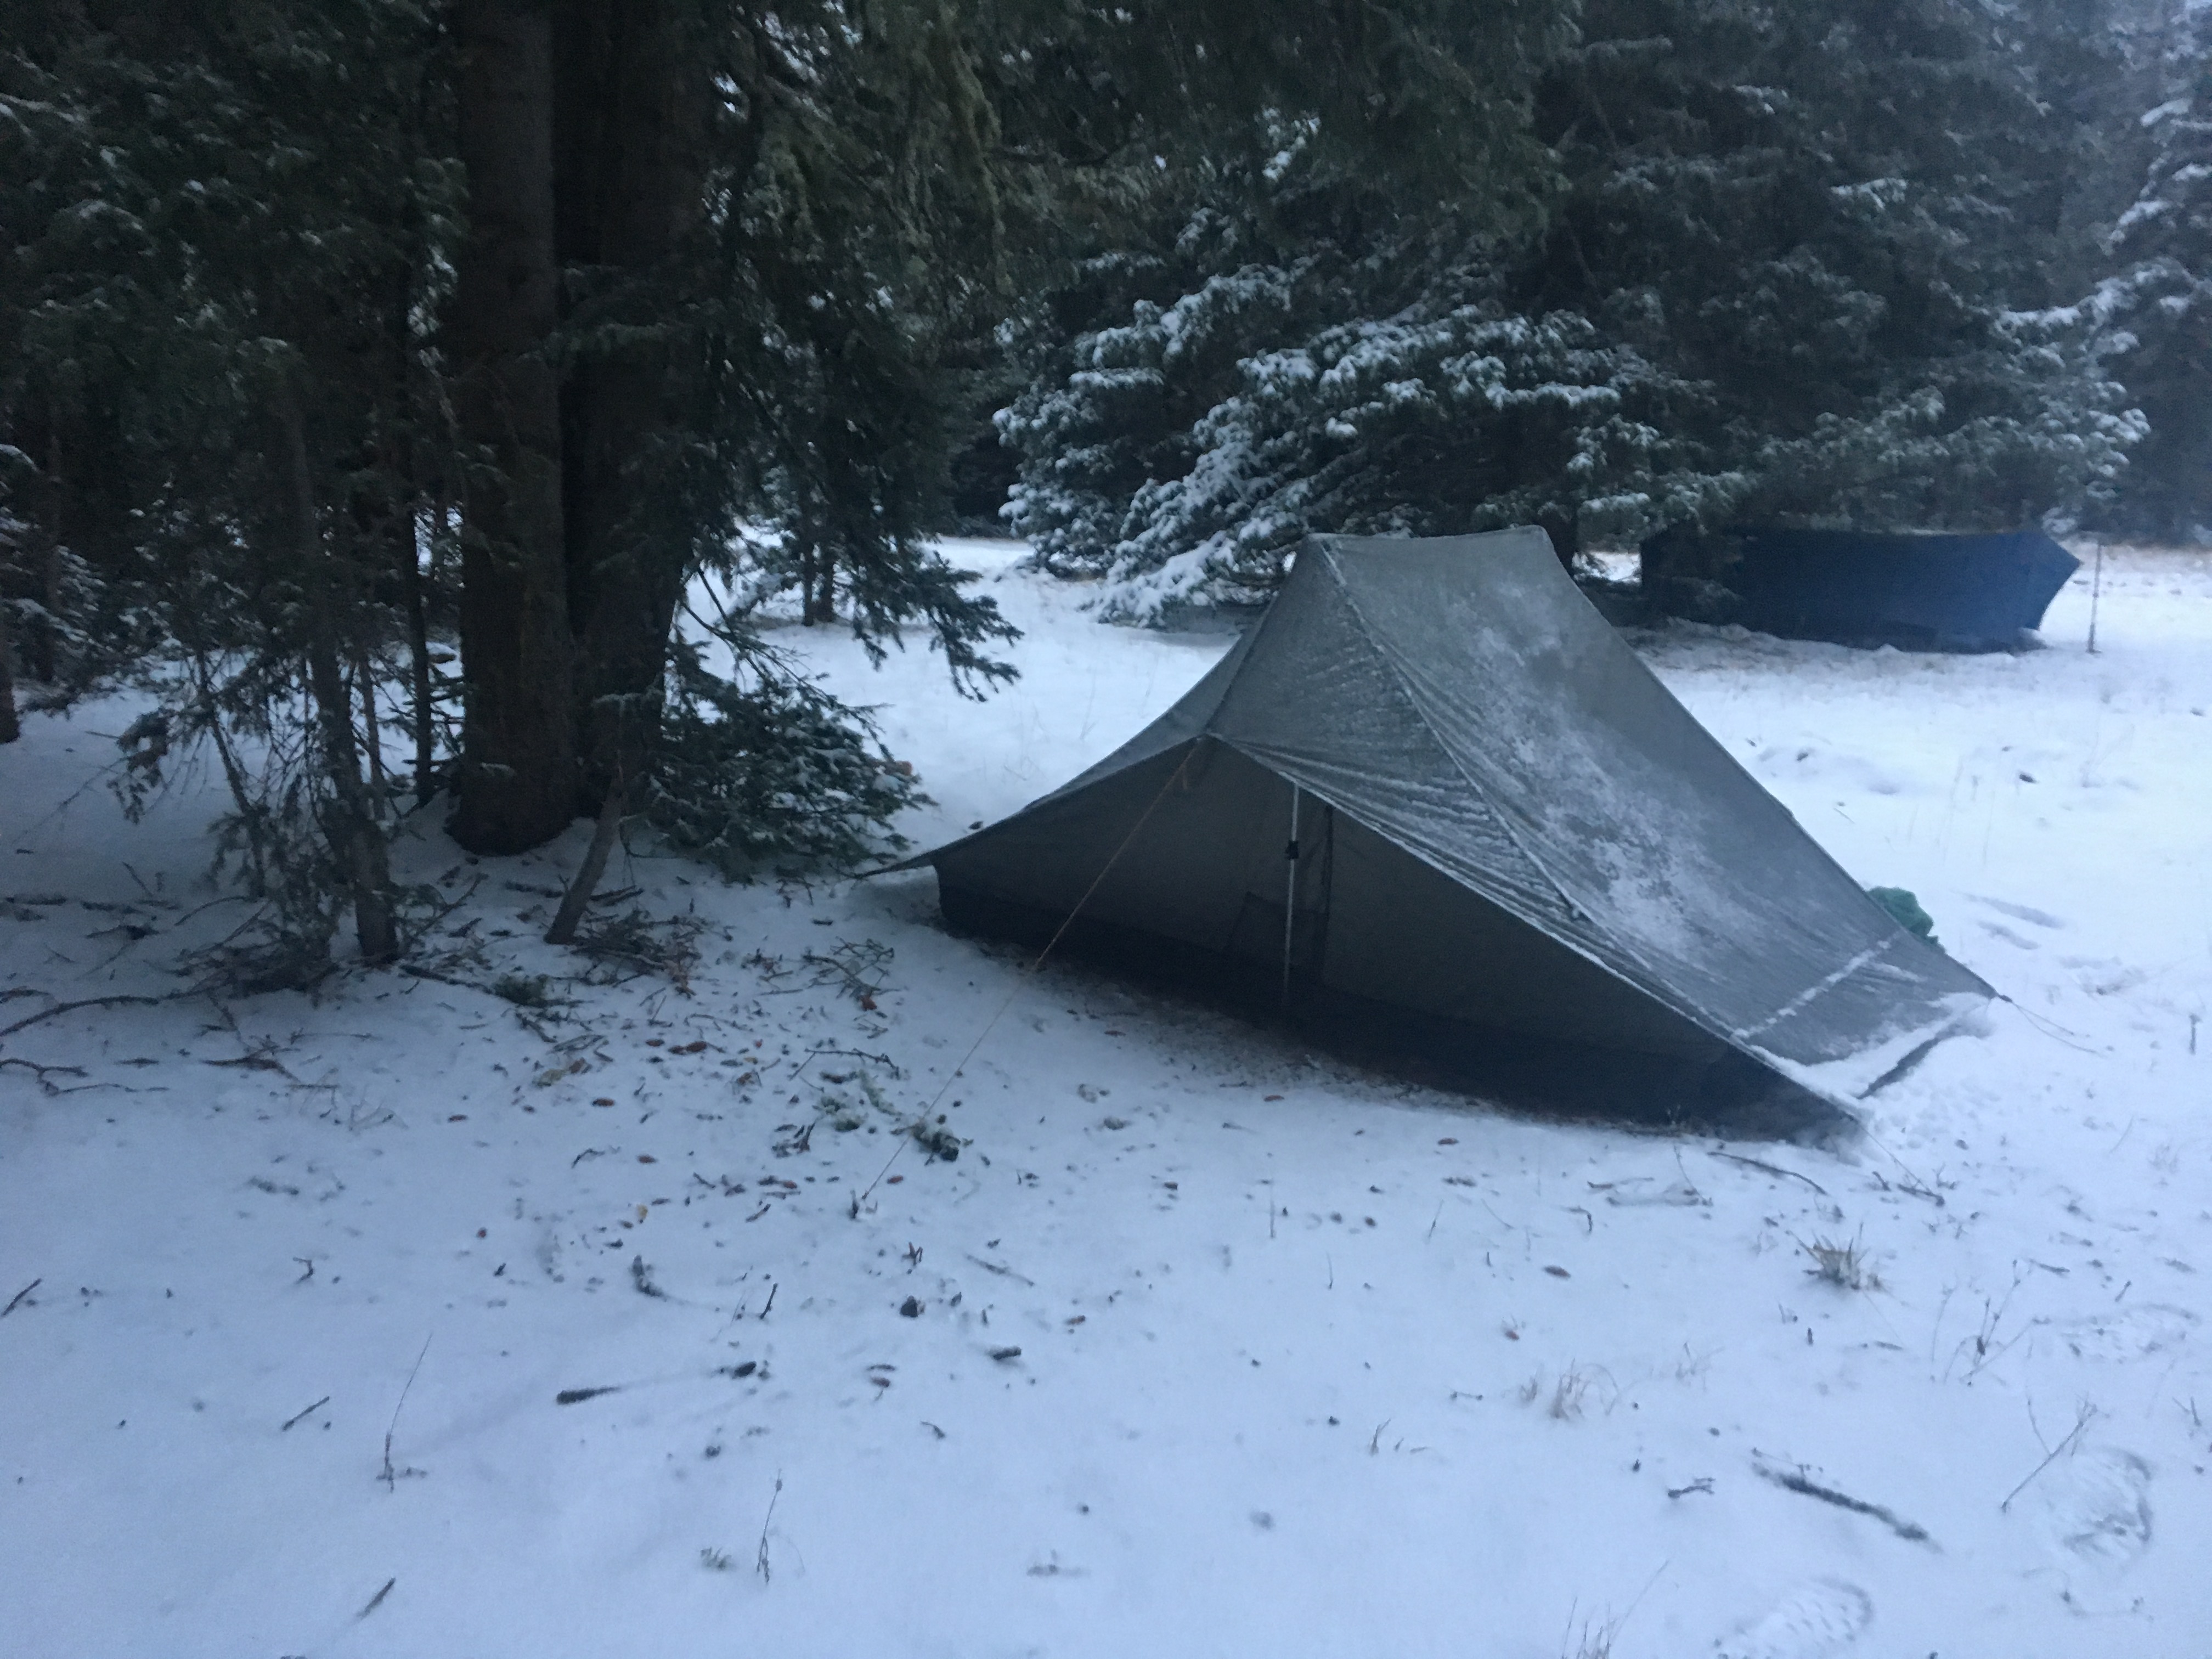 Appalachian Trail tents and tarps